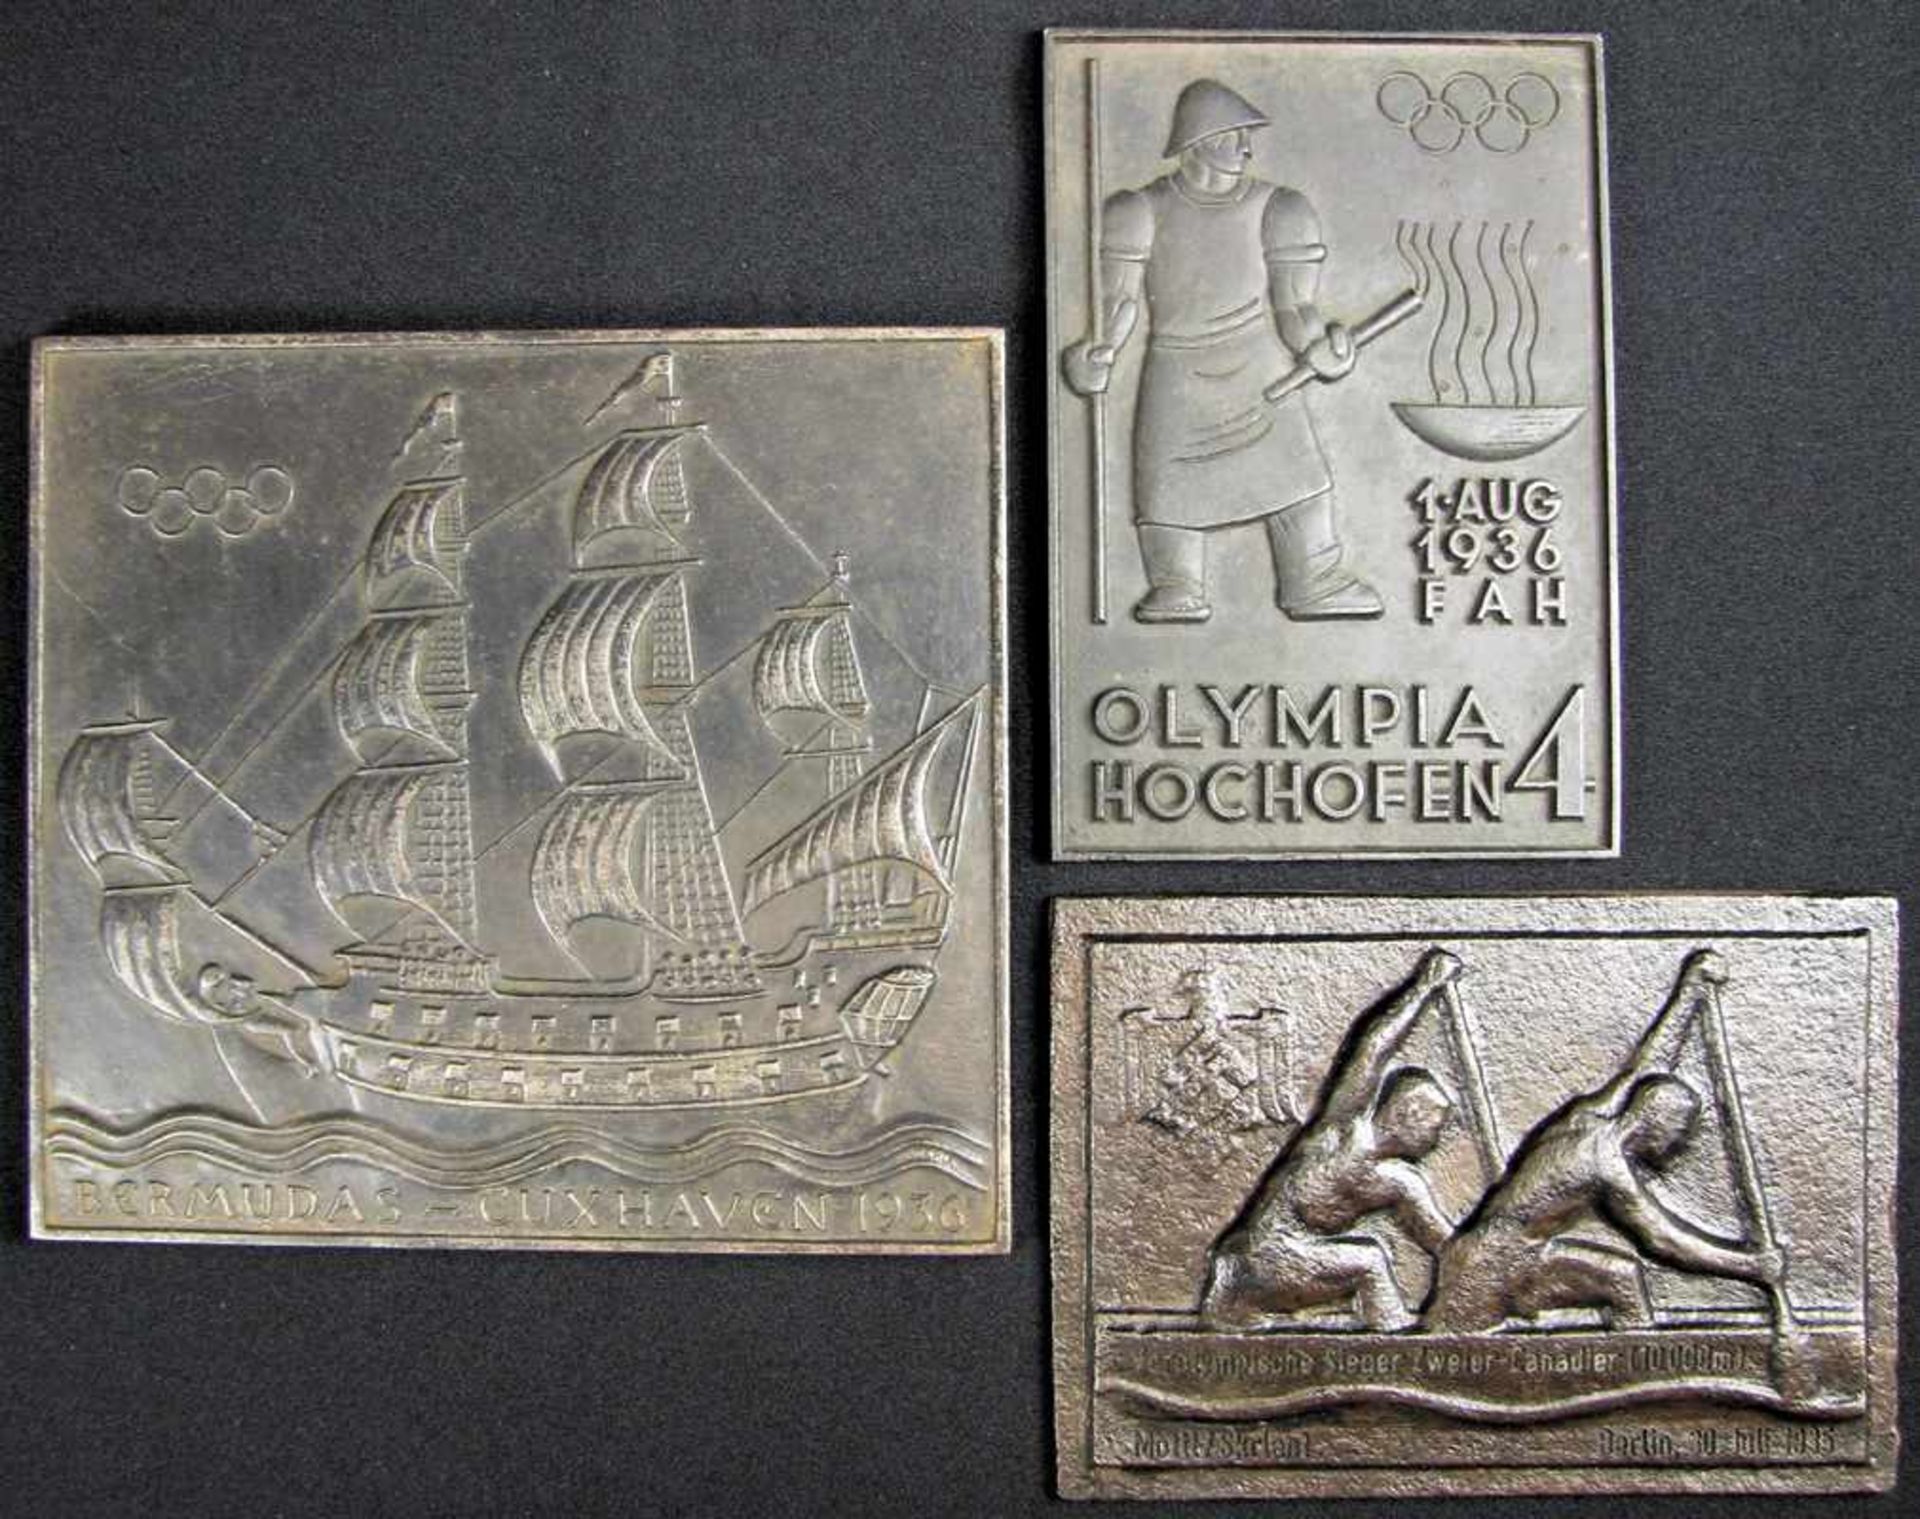 Olympic Games Berlin 1936 Three Iron Cast plaques - Three iron cast plates: 1. Inscription "Bermudas